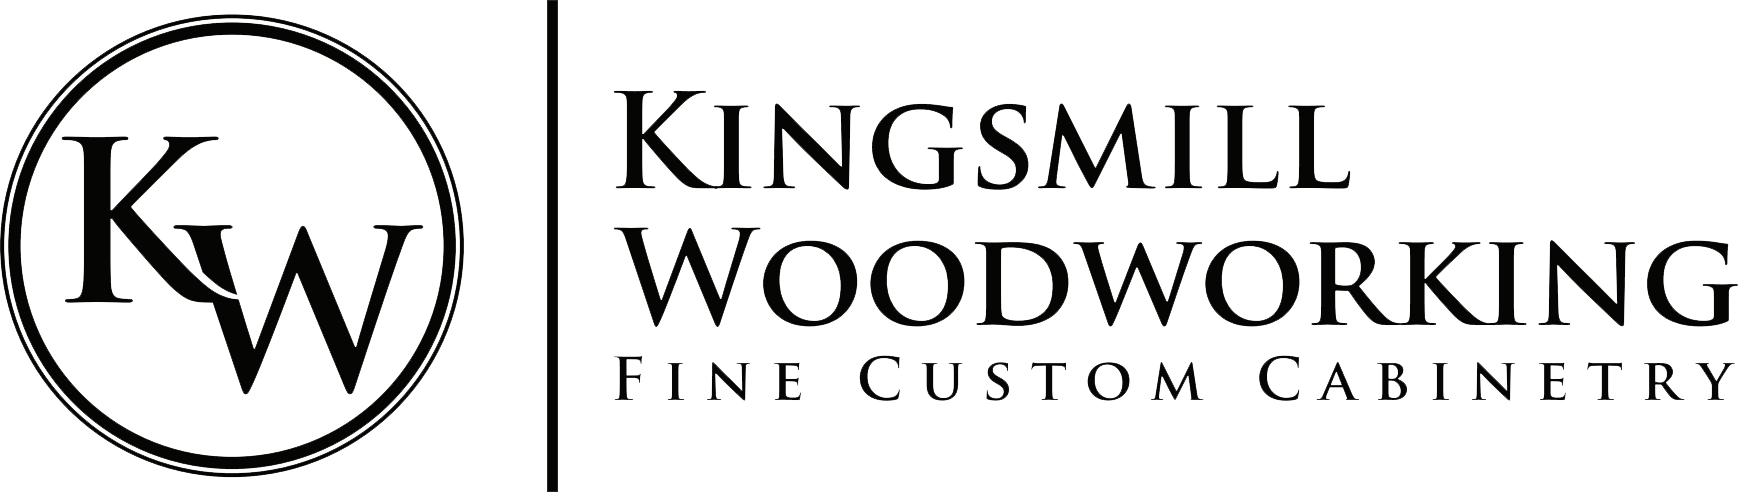 Kingsmill Woodworking